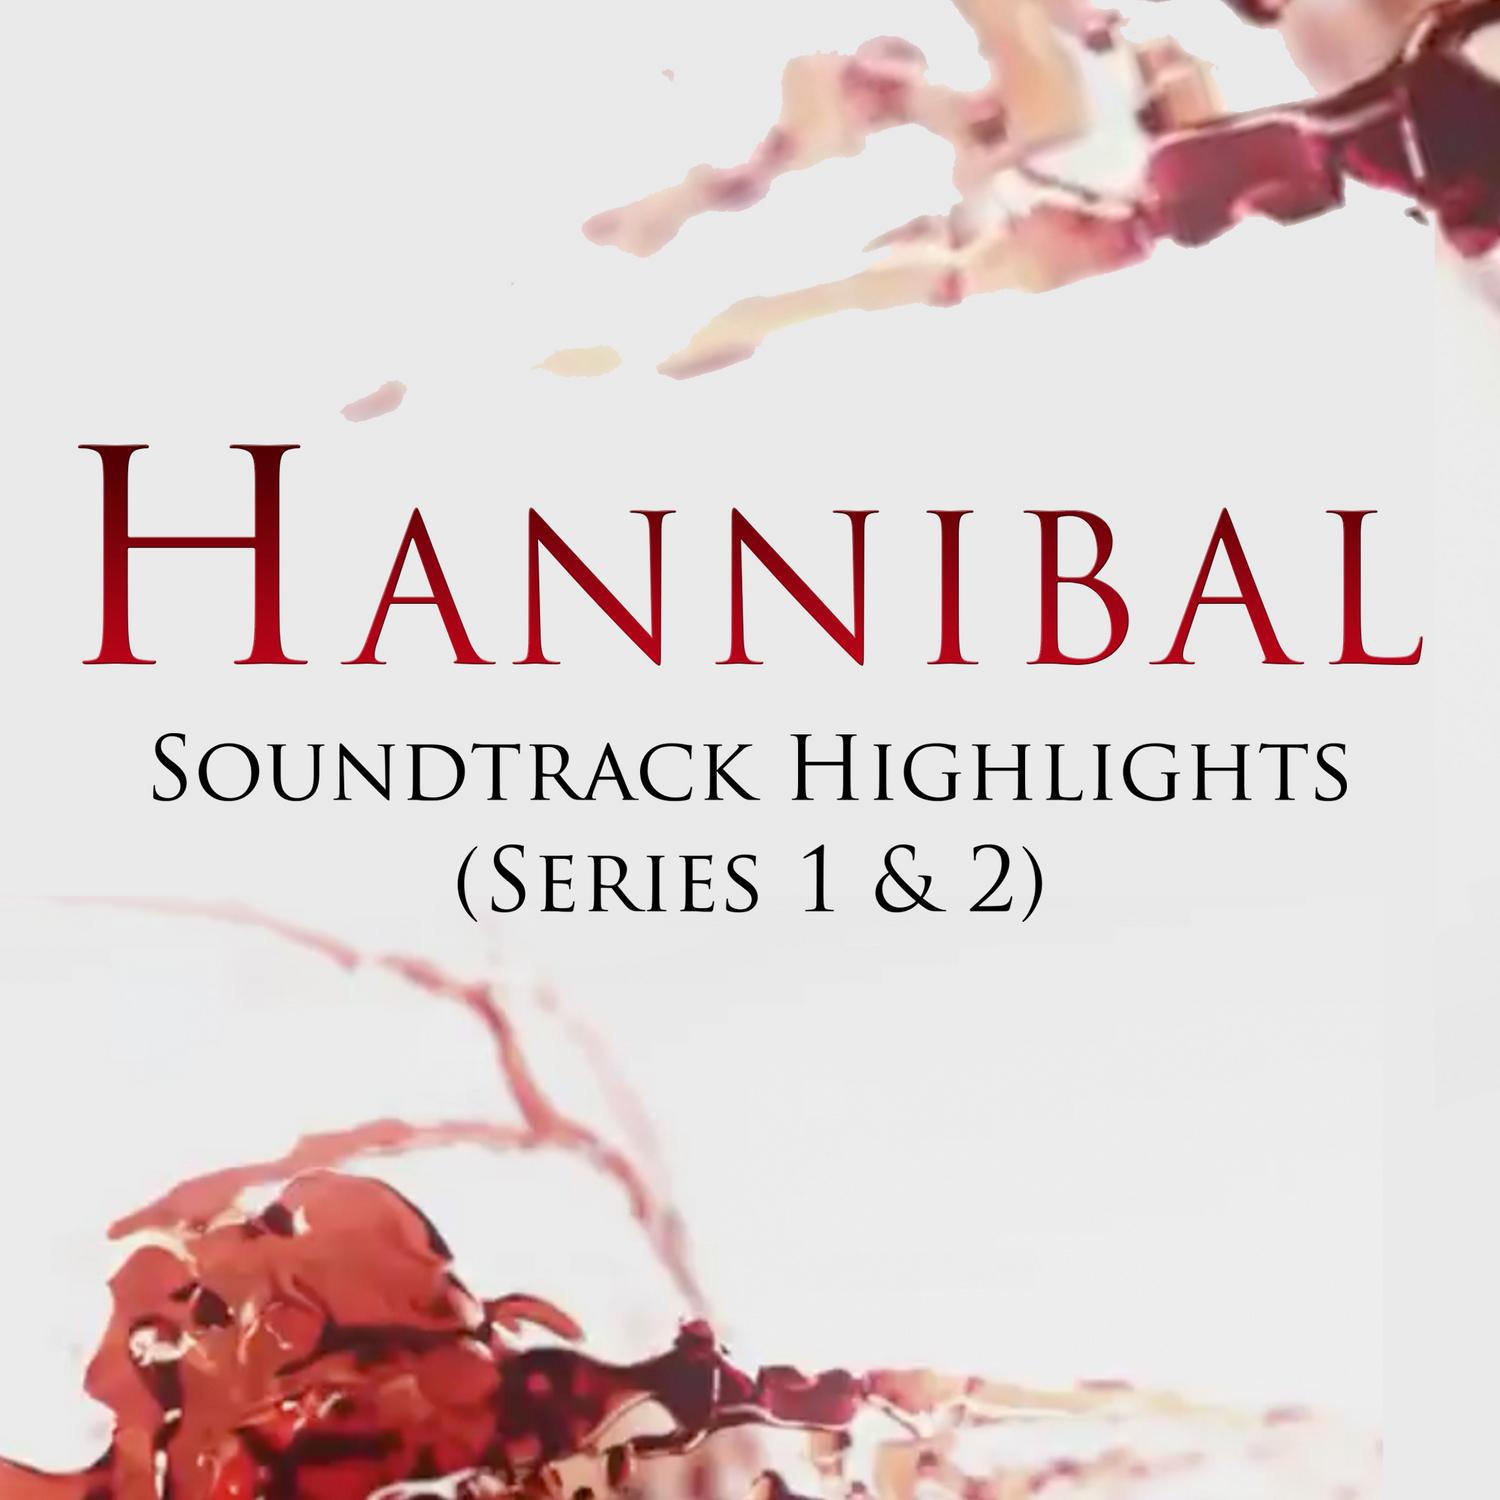 Hannibal: Soundtrack Highlights Series 1 & 2